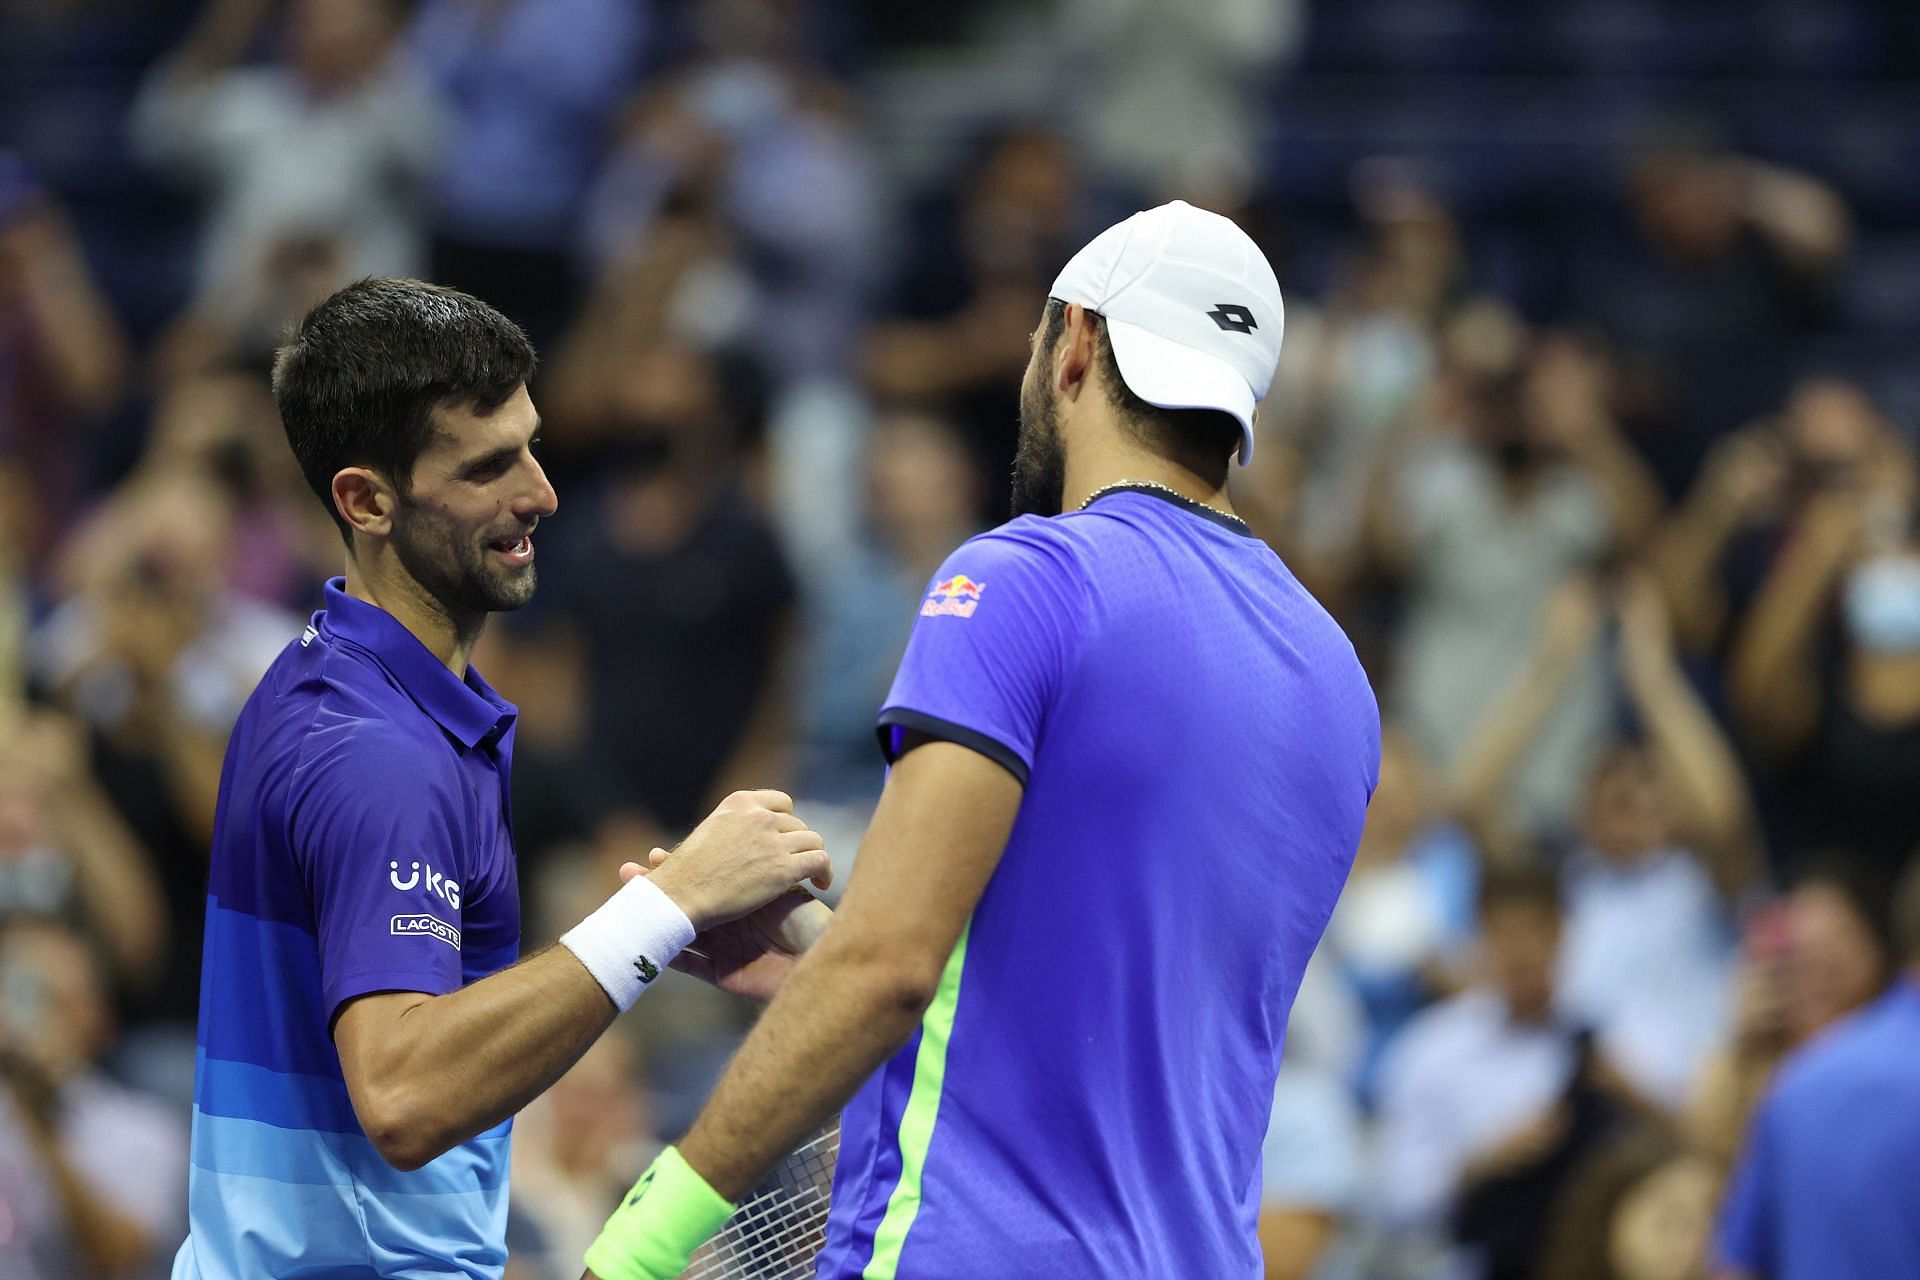 Novak Djokovic after defeating Matteo Berrettini at the 2021 US Open